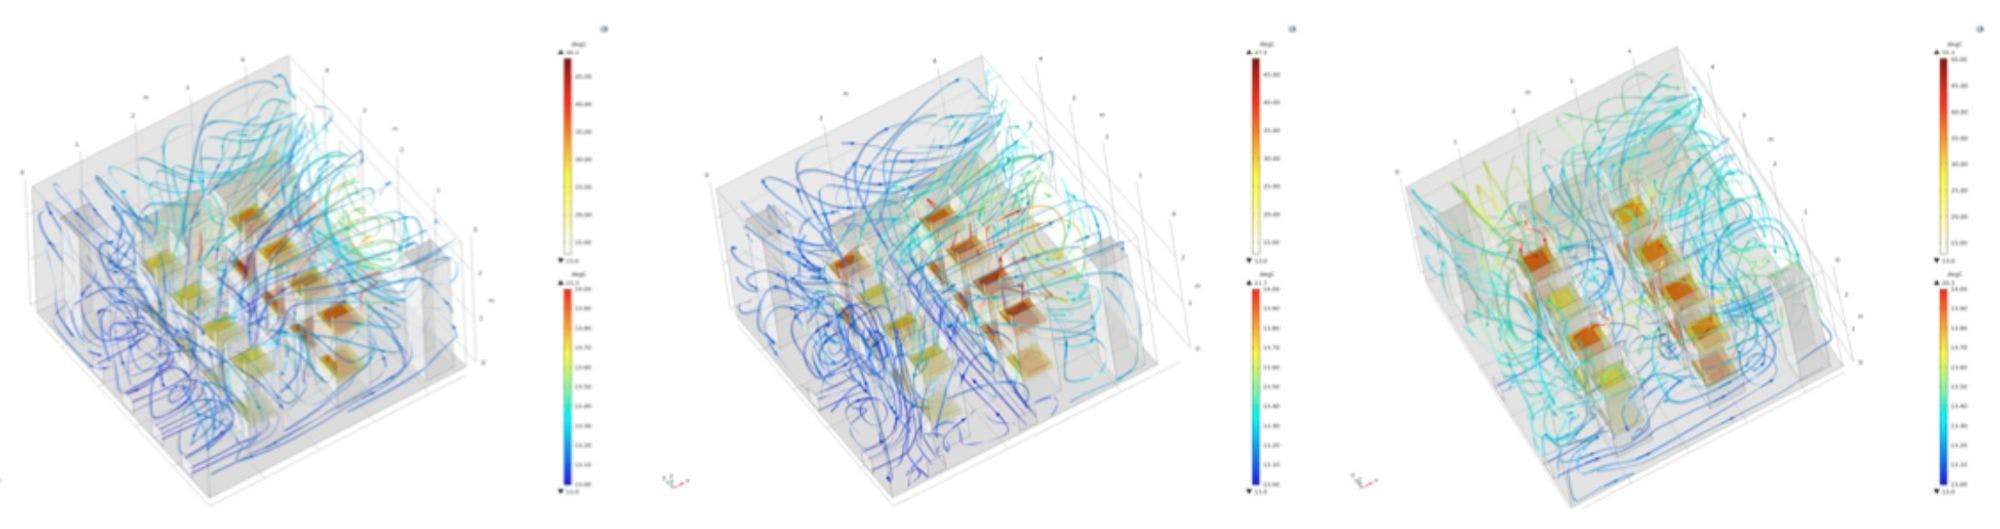 Multi-Ventilation Convective Heat Transfer via Computational Fluid Dynamics with COMSOL @WHU